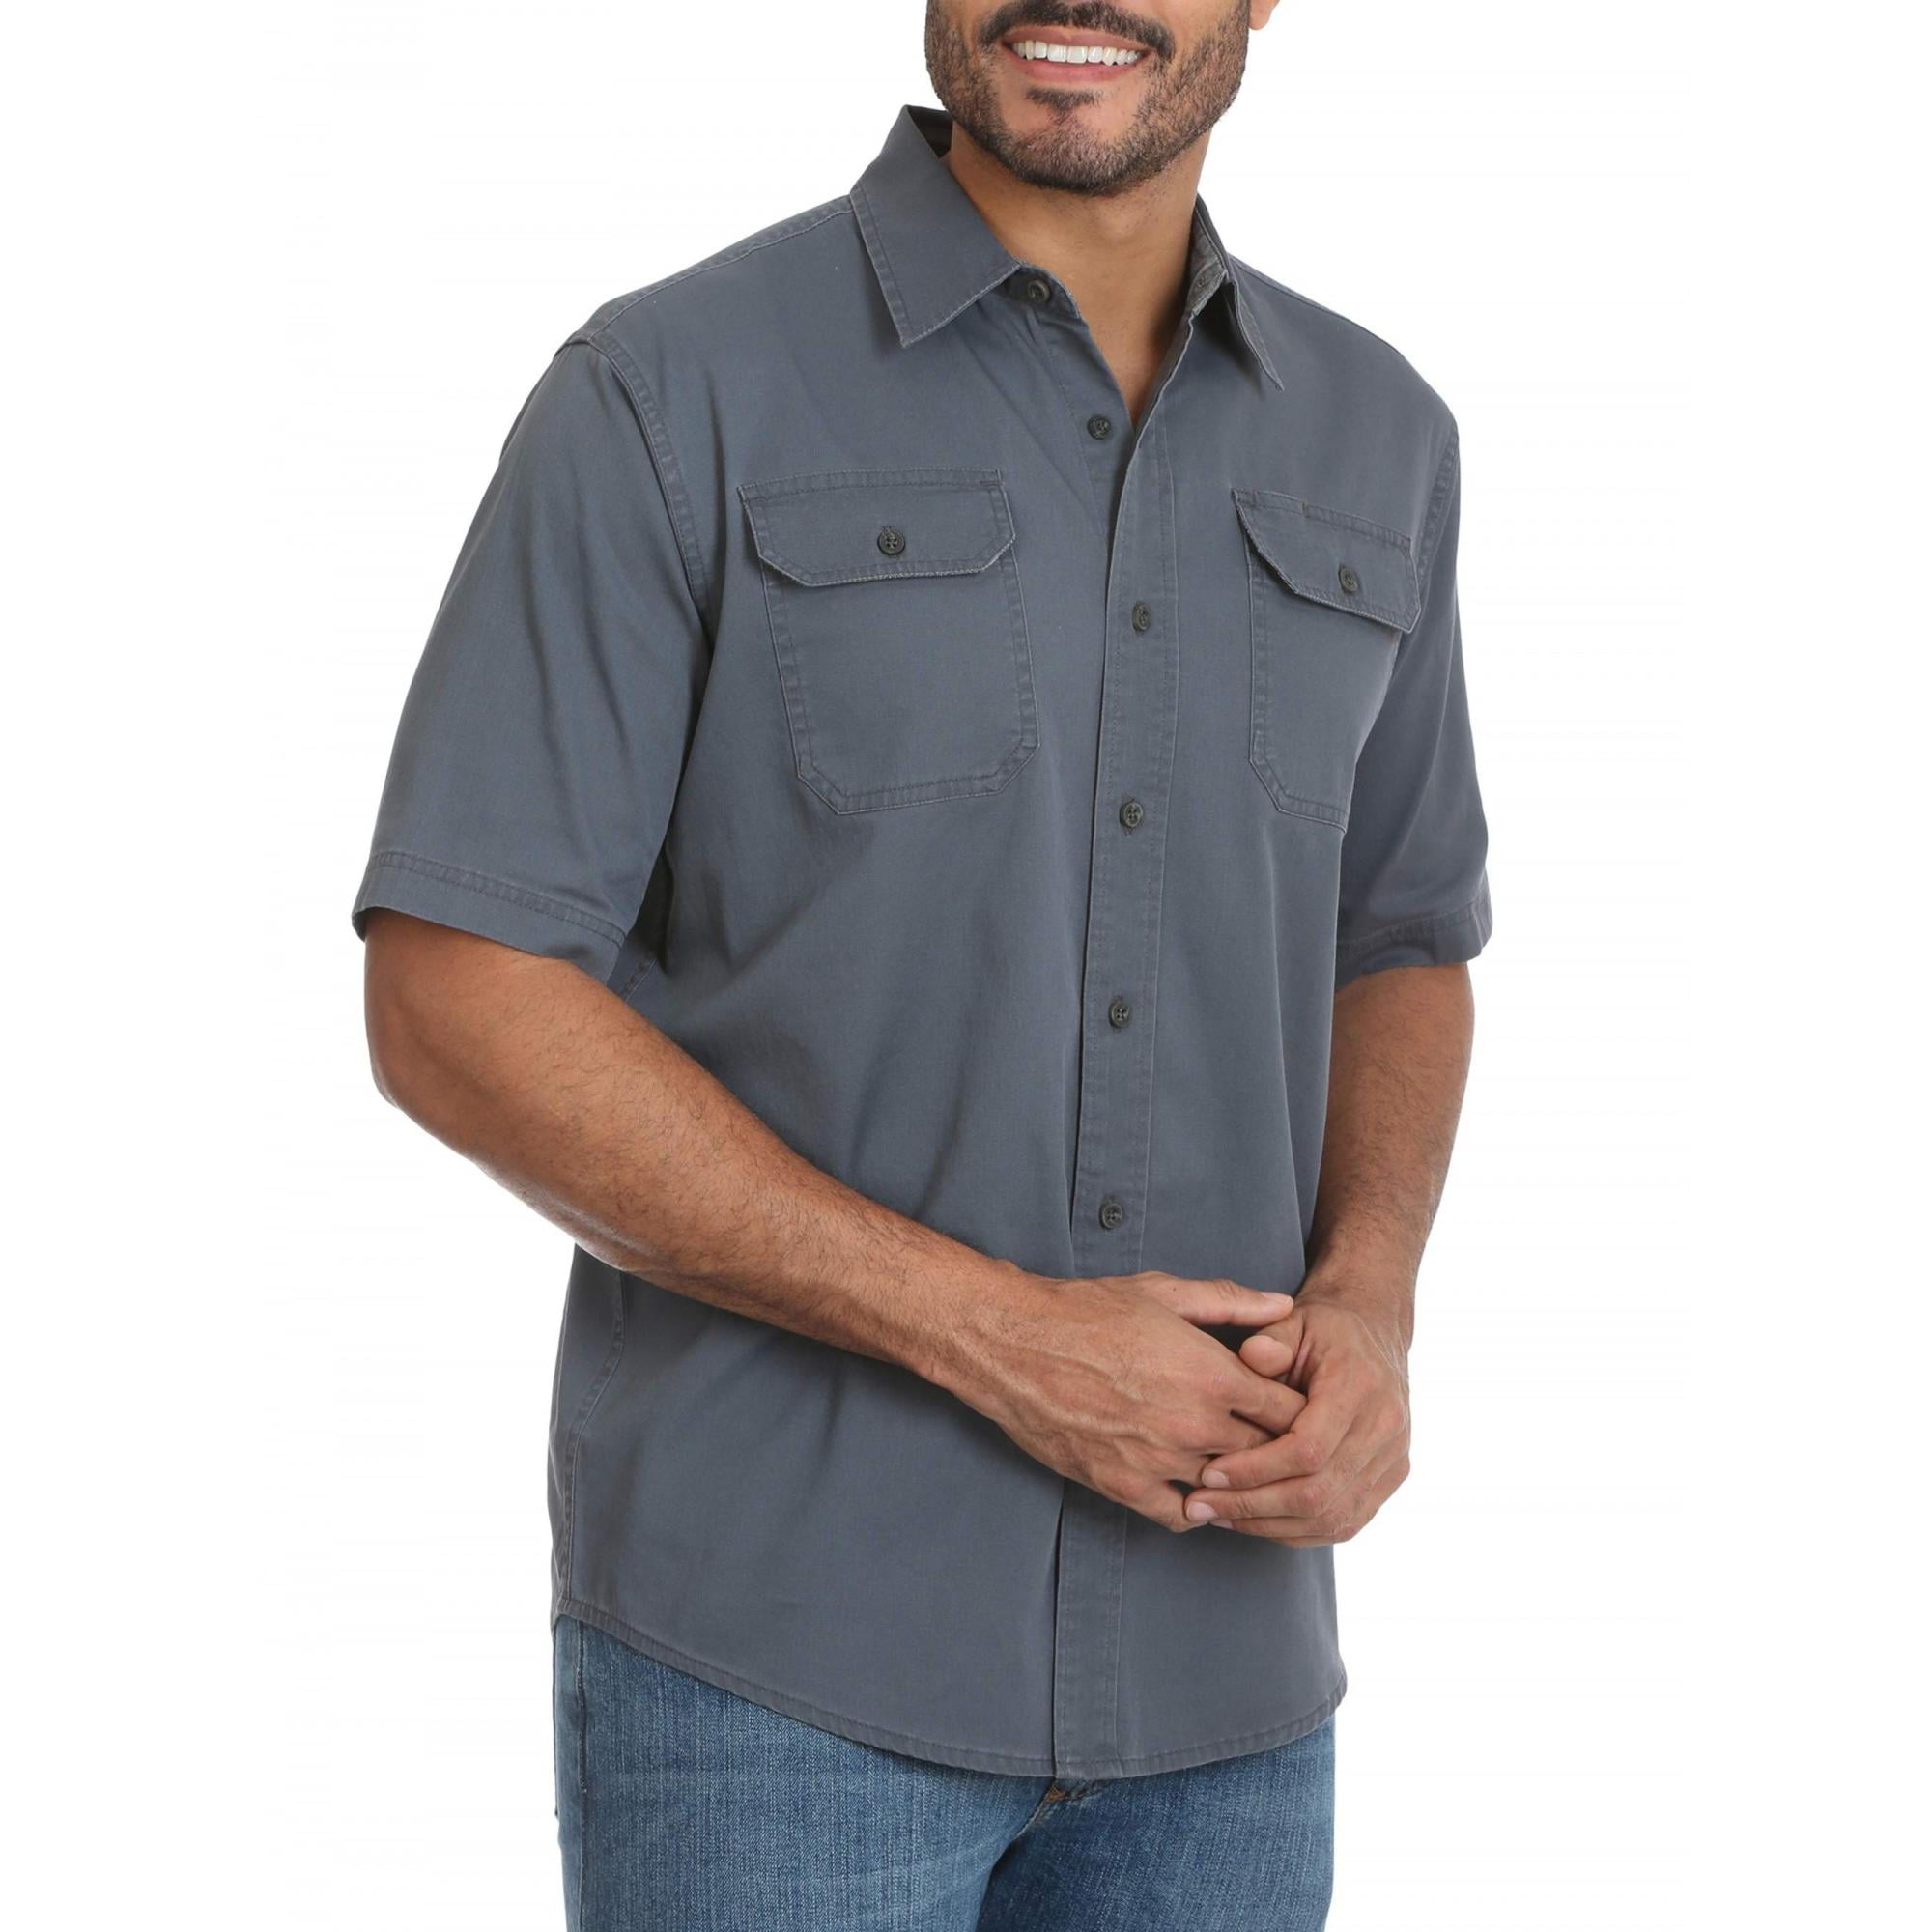 Wrangler - Men's Short Sleeve Twill Shirt - Walmart.com - Walmart.com